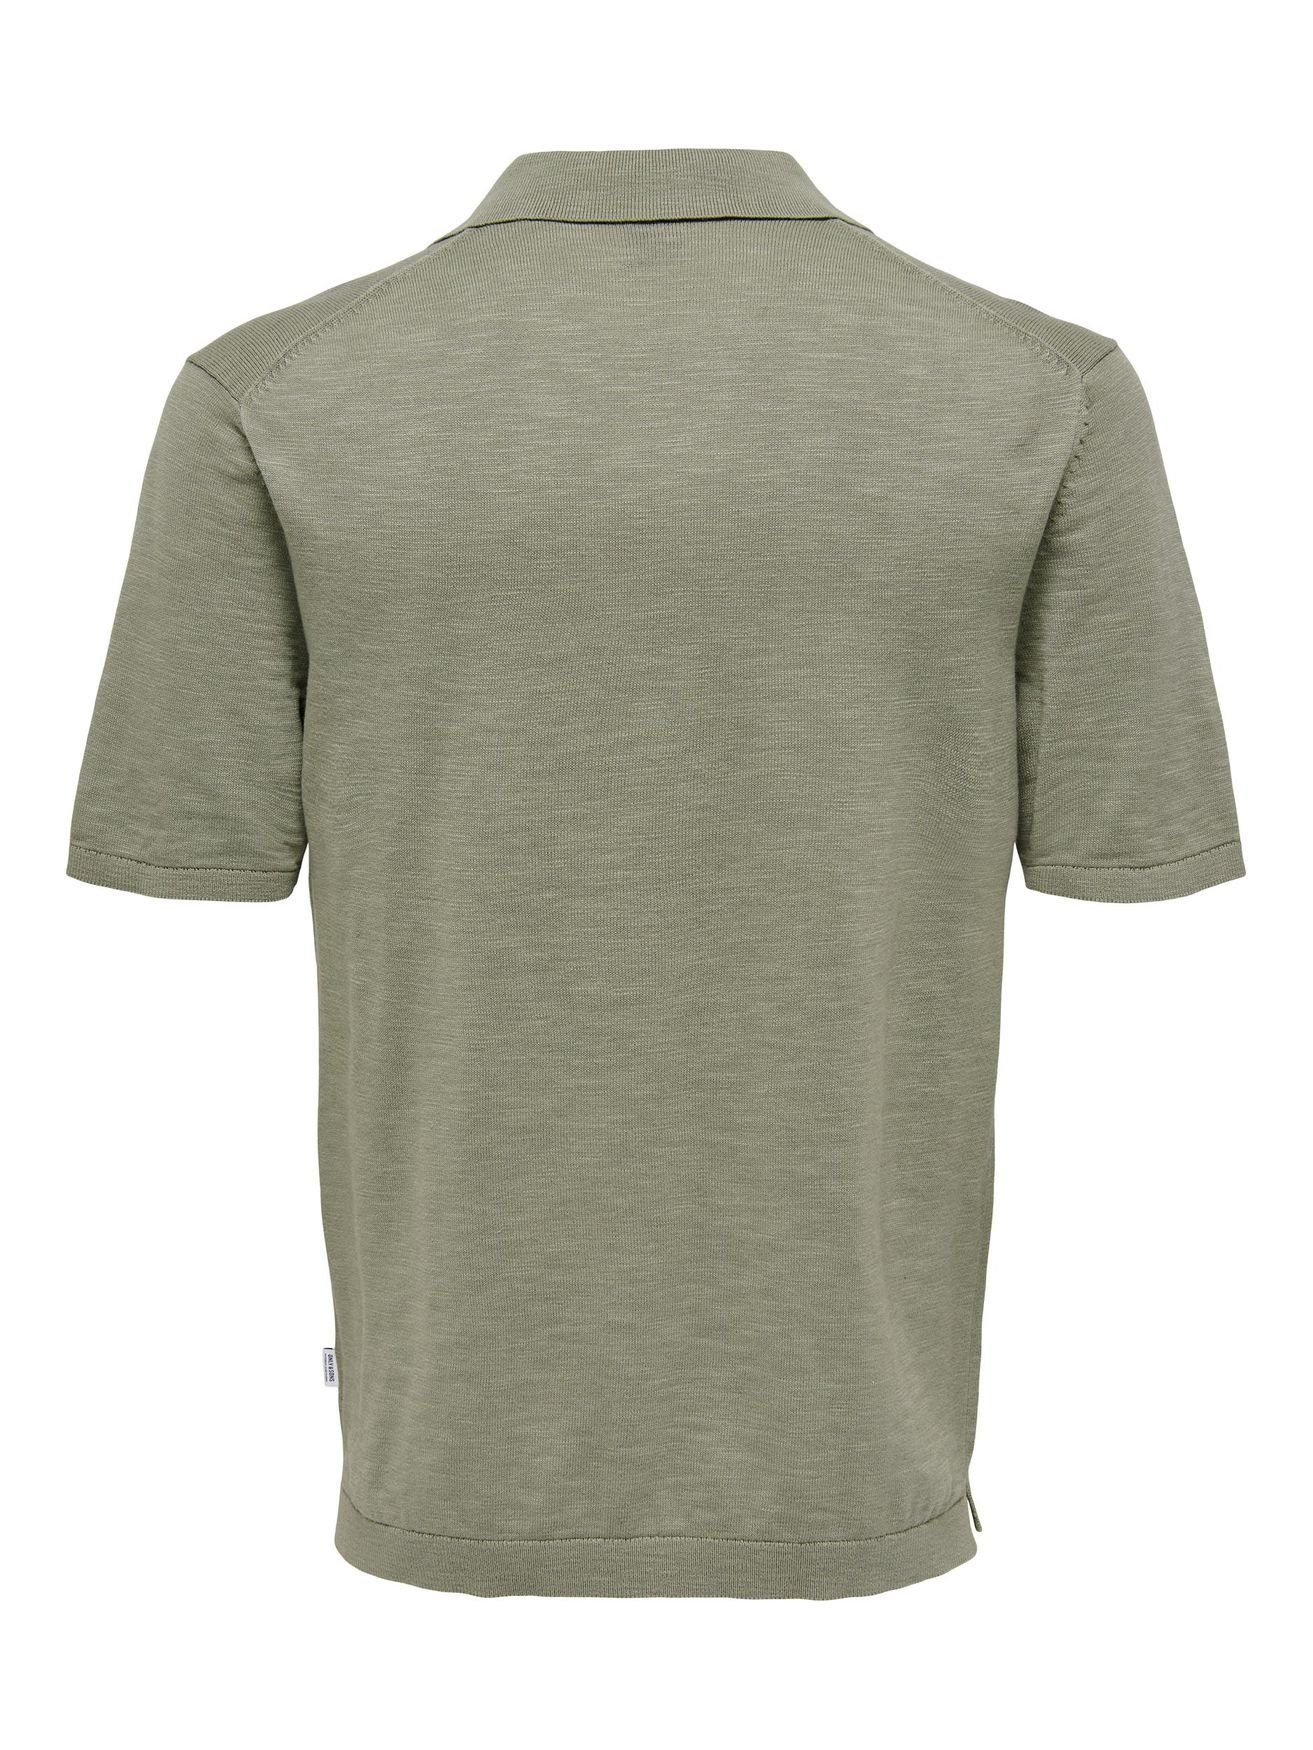 ONLY & SONS Poloshirt Einfarbiges Grün aus in 5025 Polo Shirt ONSACE Baumwolle Kurzarm Hemd